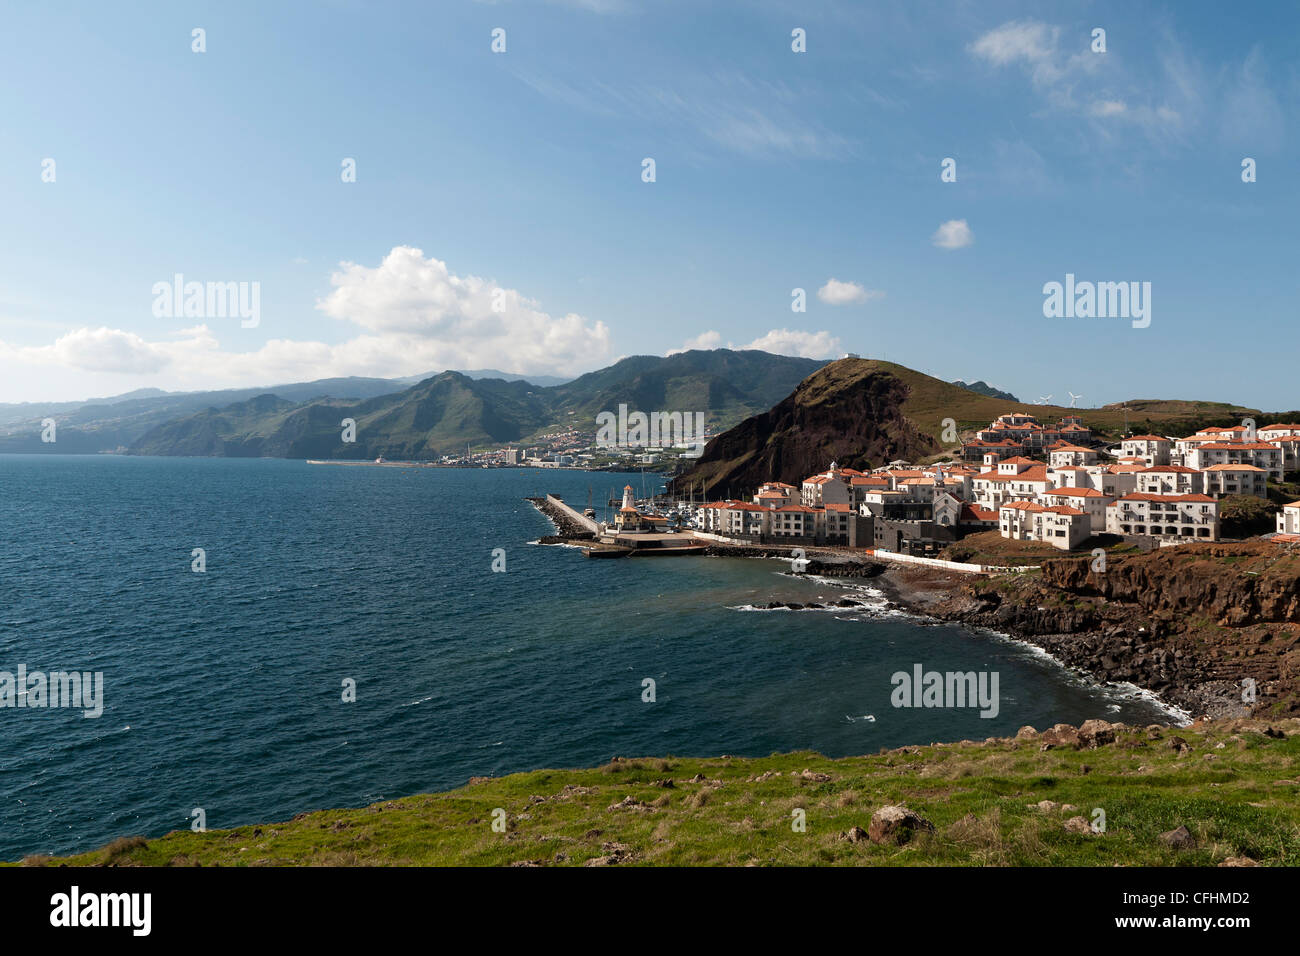 New Marina, Cape St. Lawrenc, Canical, Madeira Stock Photo